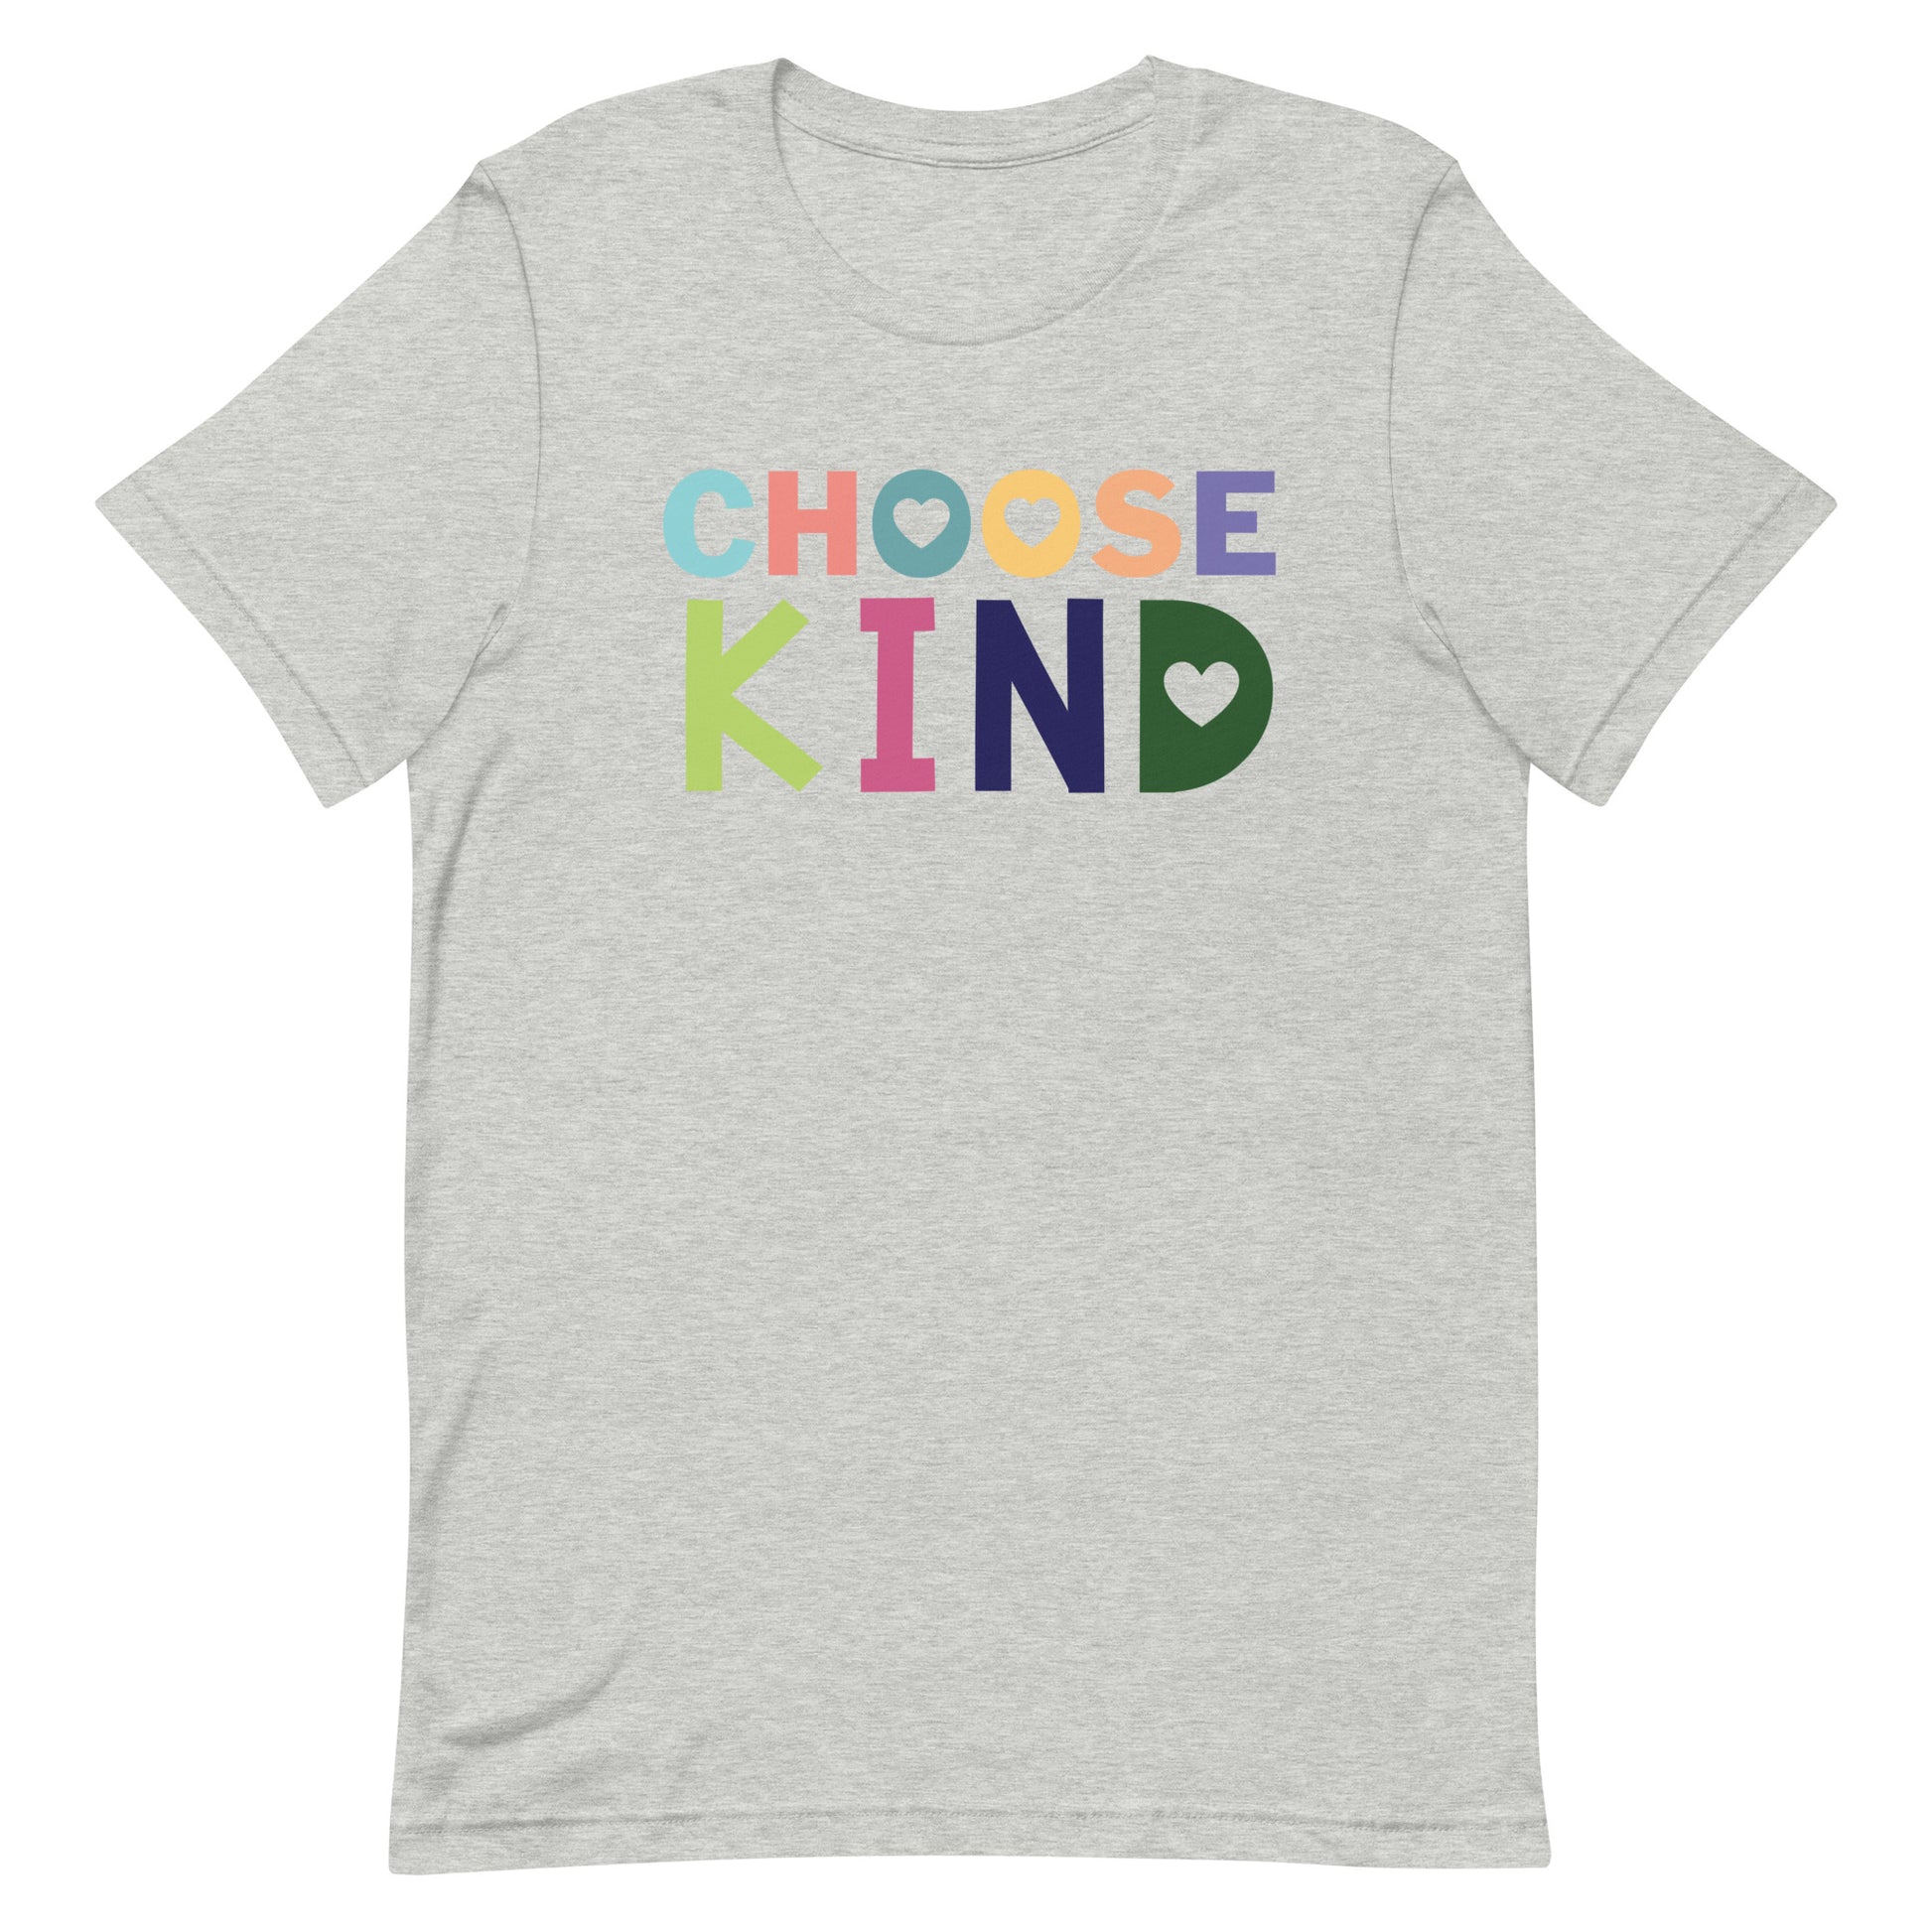 Kindness Teacher T-Shirt -  Choose Kind Pastel Lightweight & Stretchy Cotton Blend